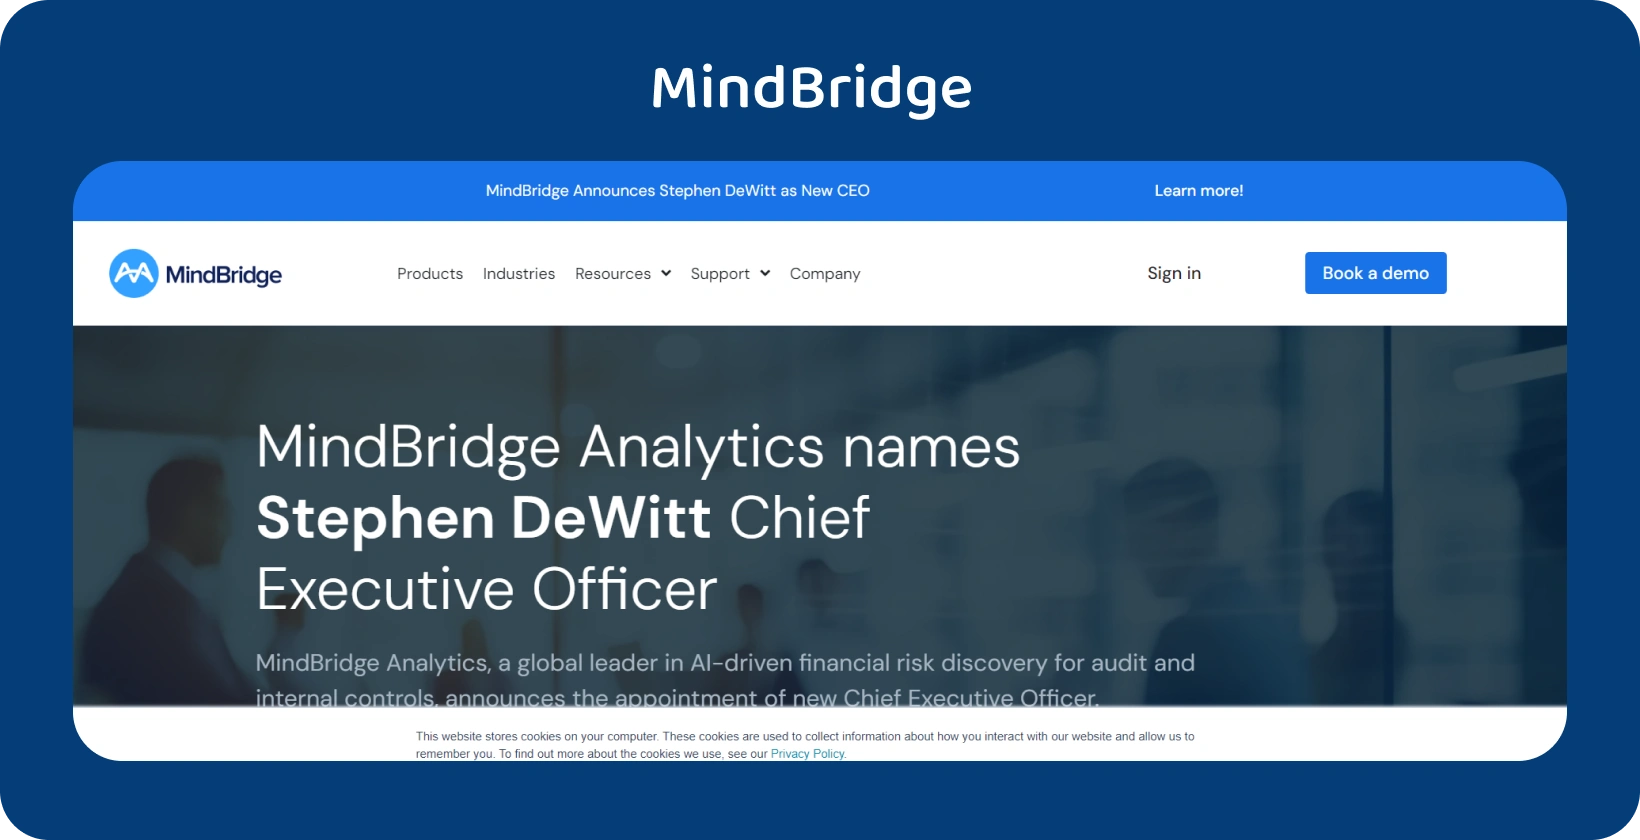 MindBridge Analytics 홈페이지는 Stephen DeWitt를 회사의 향후 여정을 이끄는 새로운 CEO로 자랑스럽게 발표합니다.